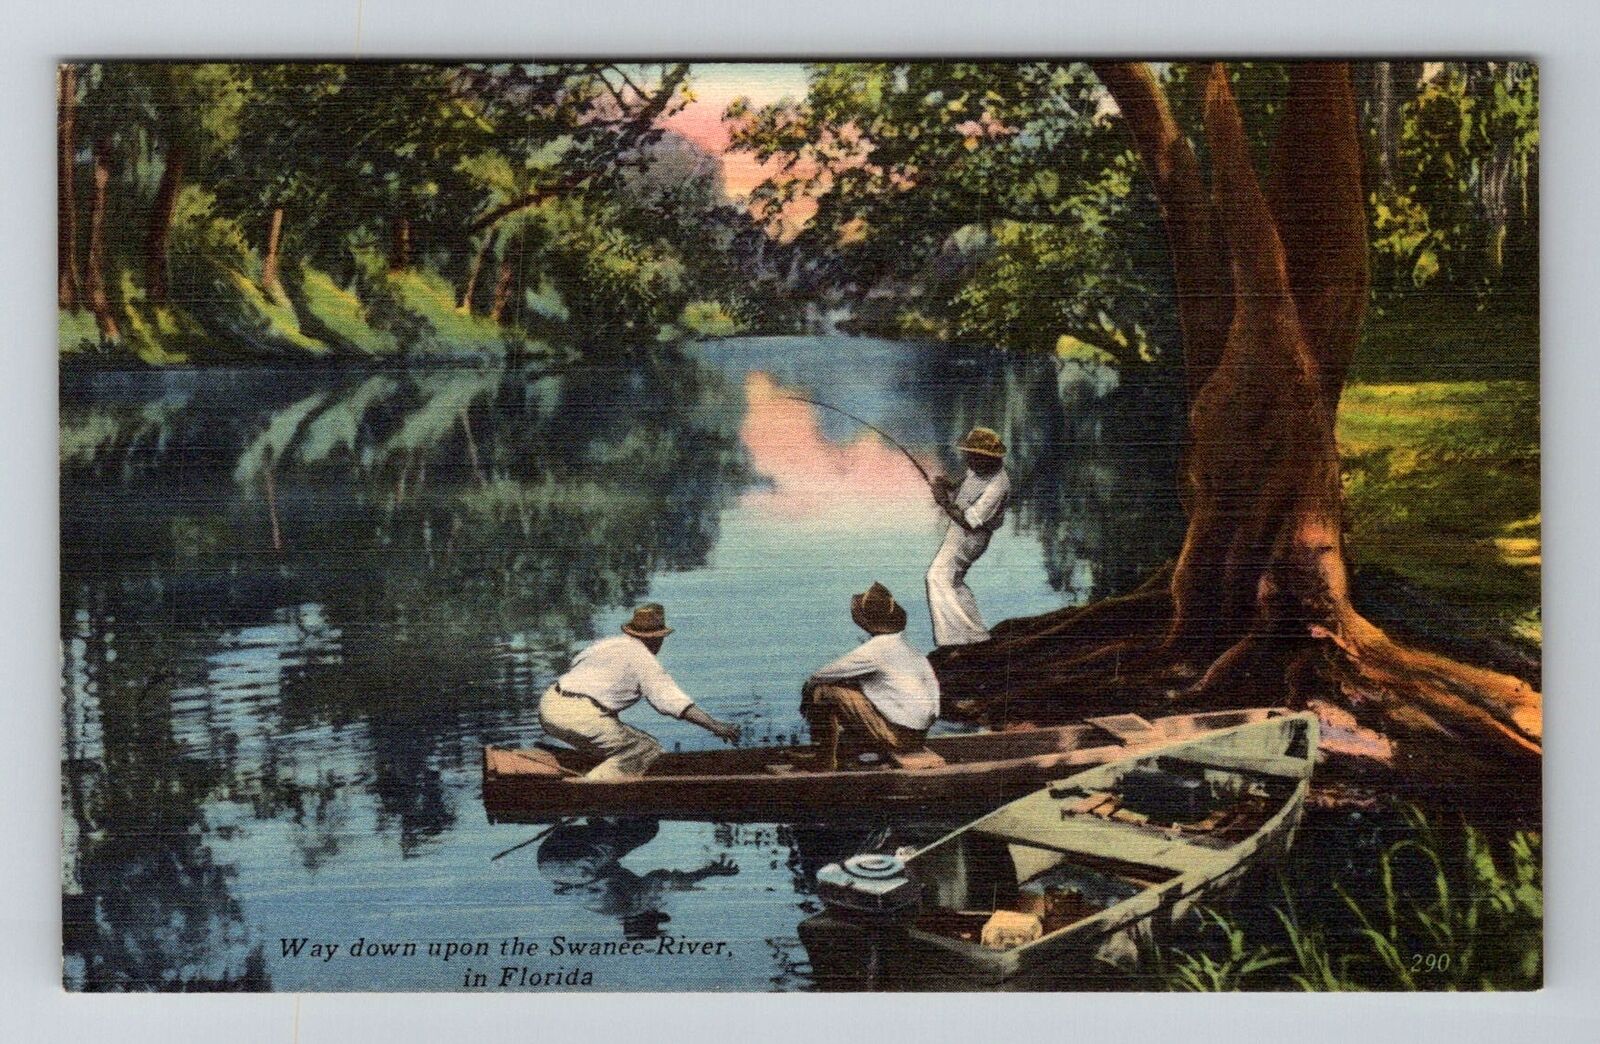 Swanee River, FL-Florida, Fishing Along River Antique, Vintage Souvenir Postcard